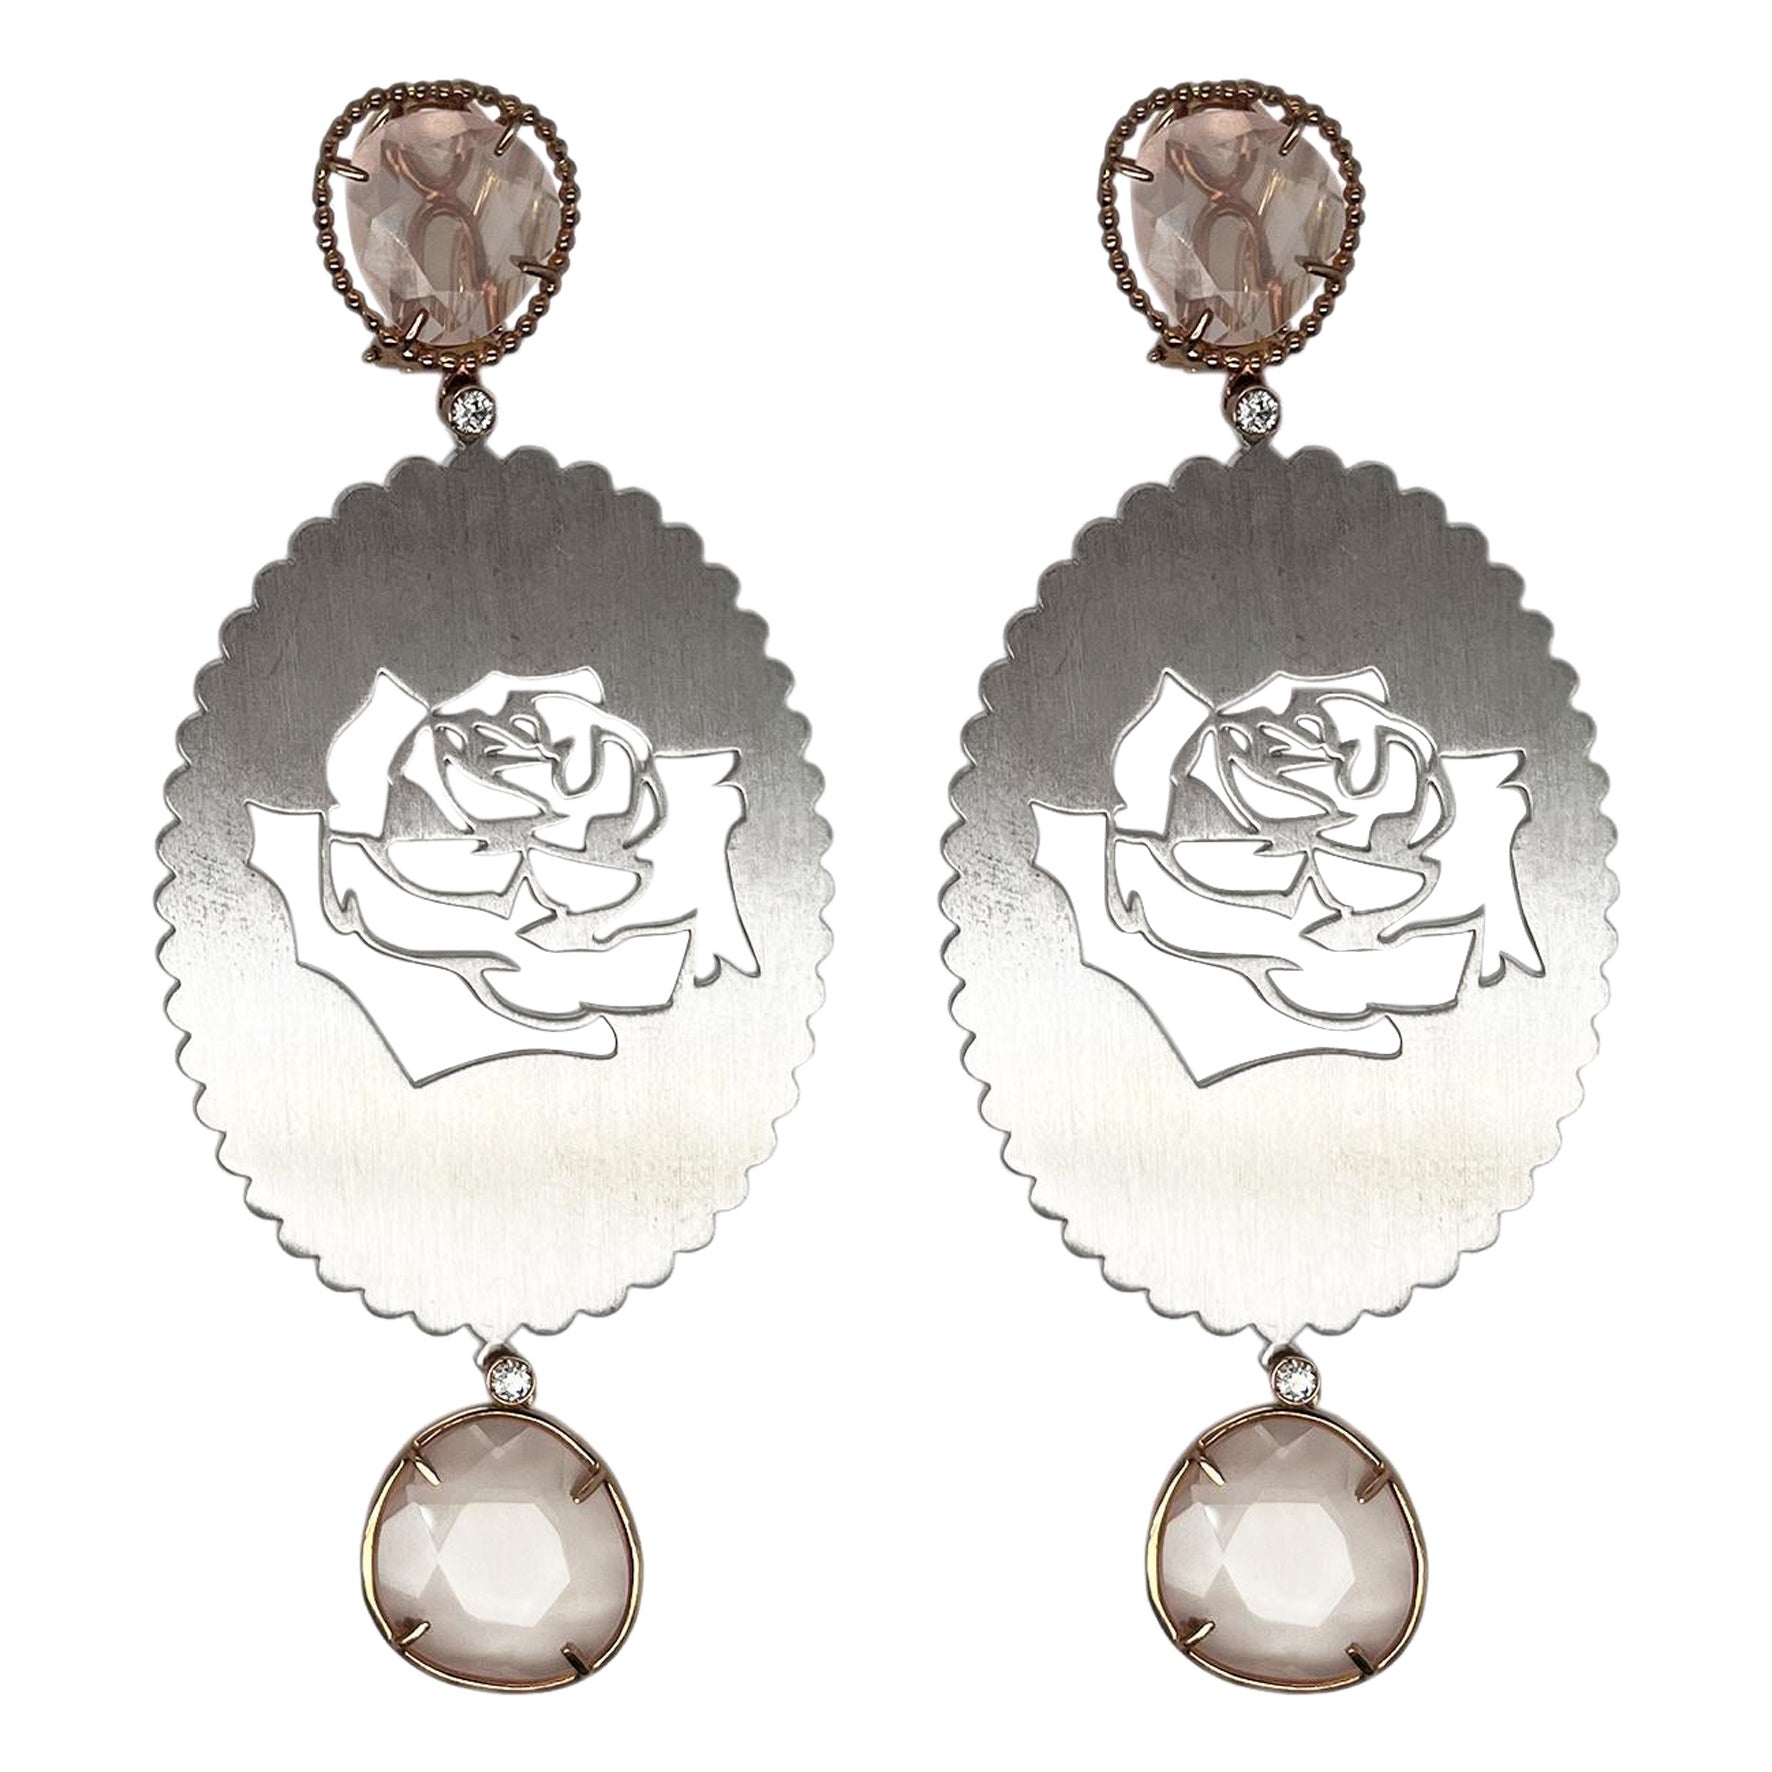 9kt rose gold & engraved silver earrings, pink quartz & diamonds